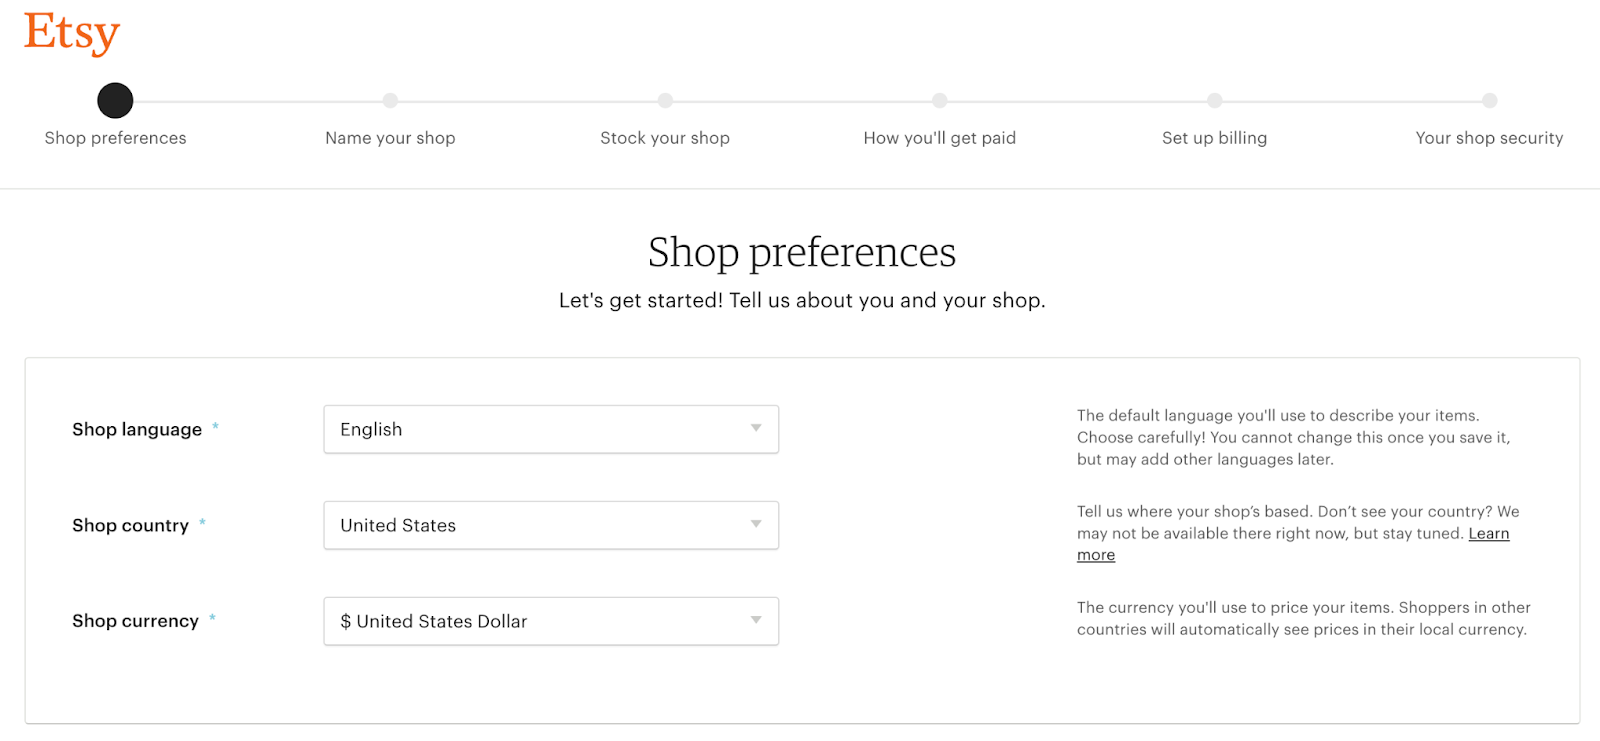 Shop preferences page on Etsy